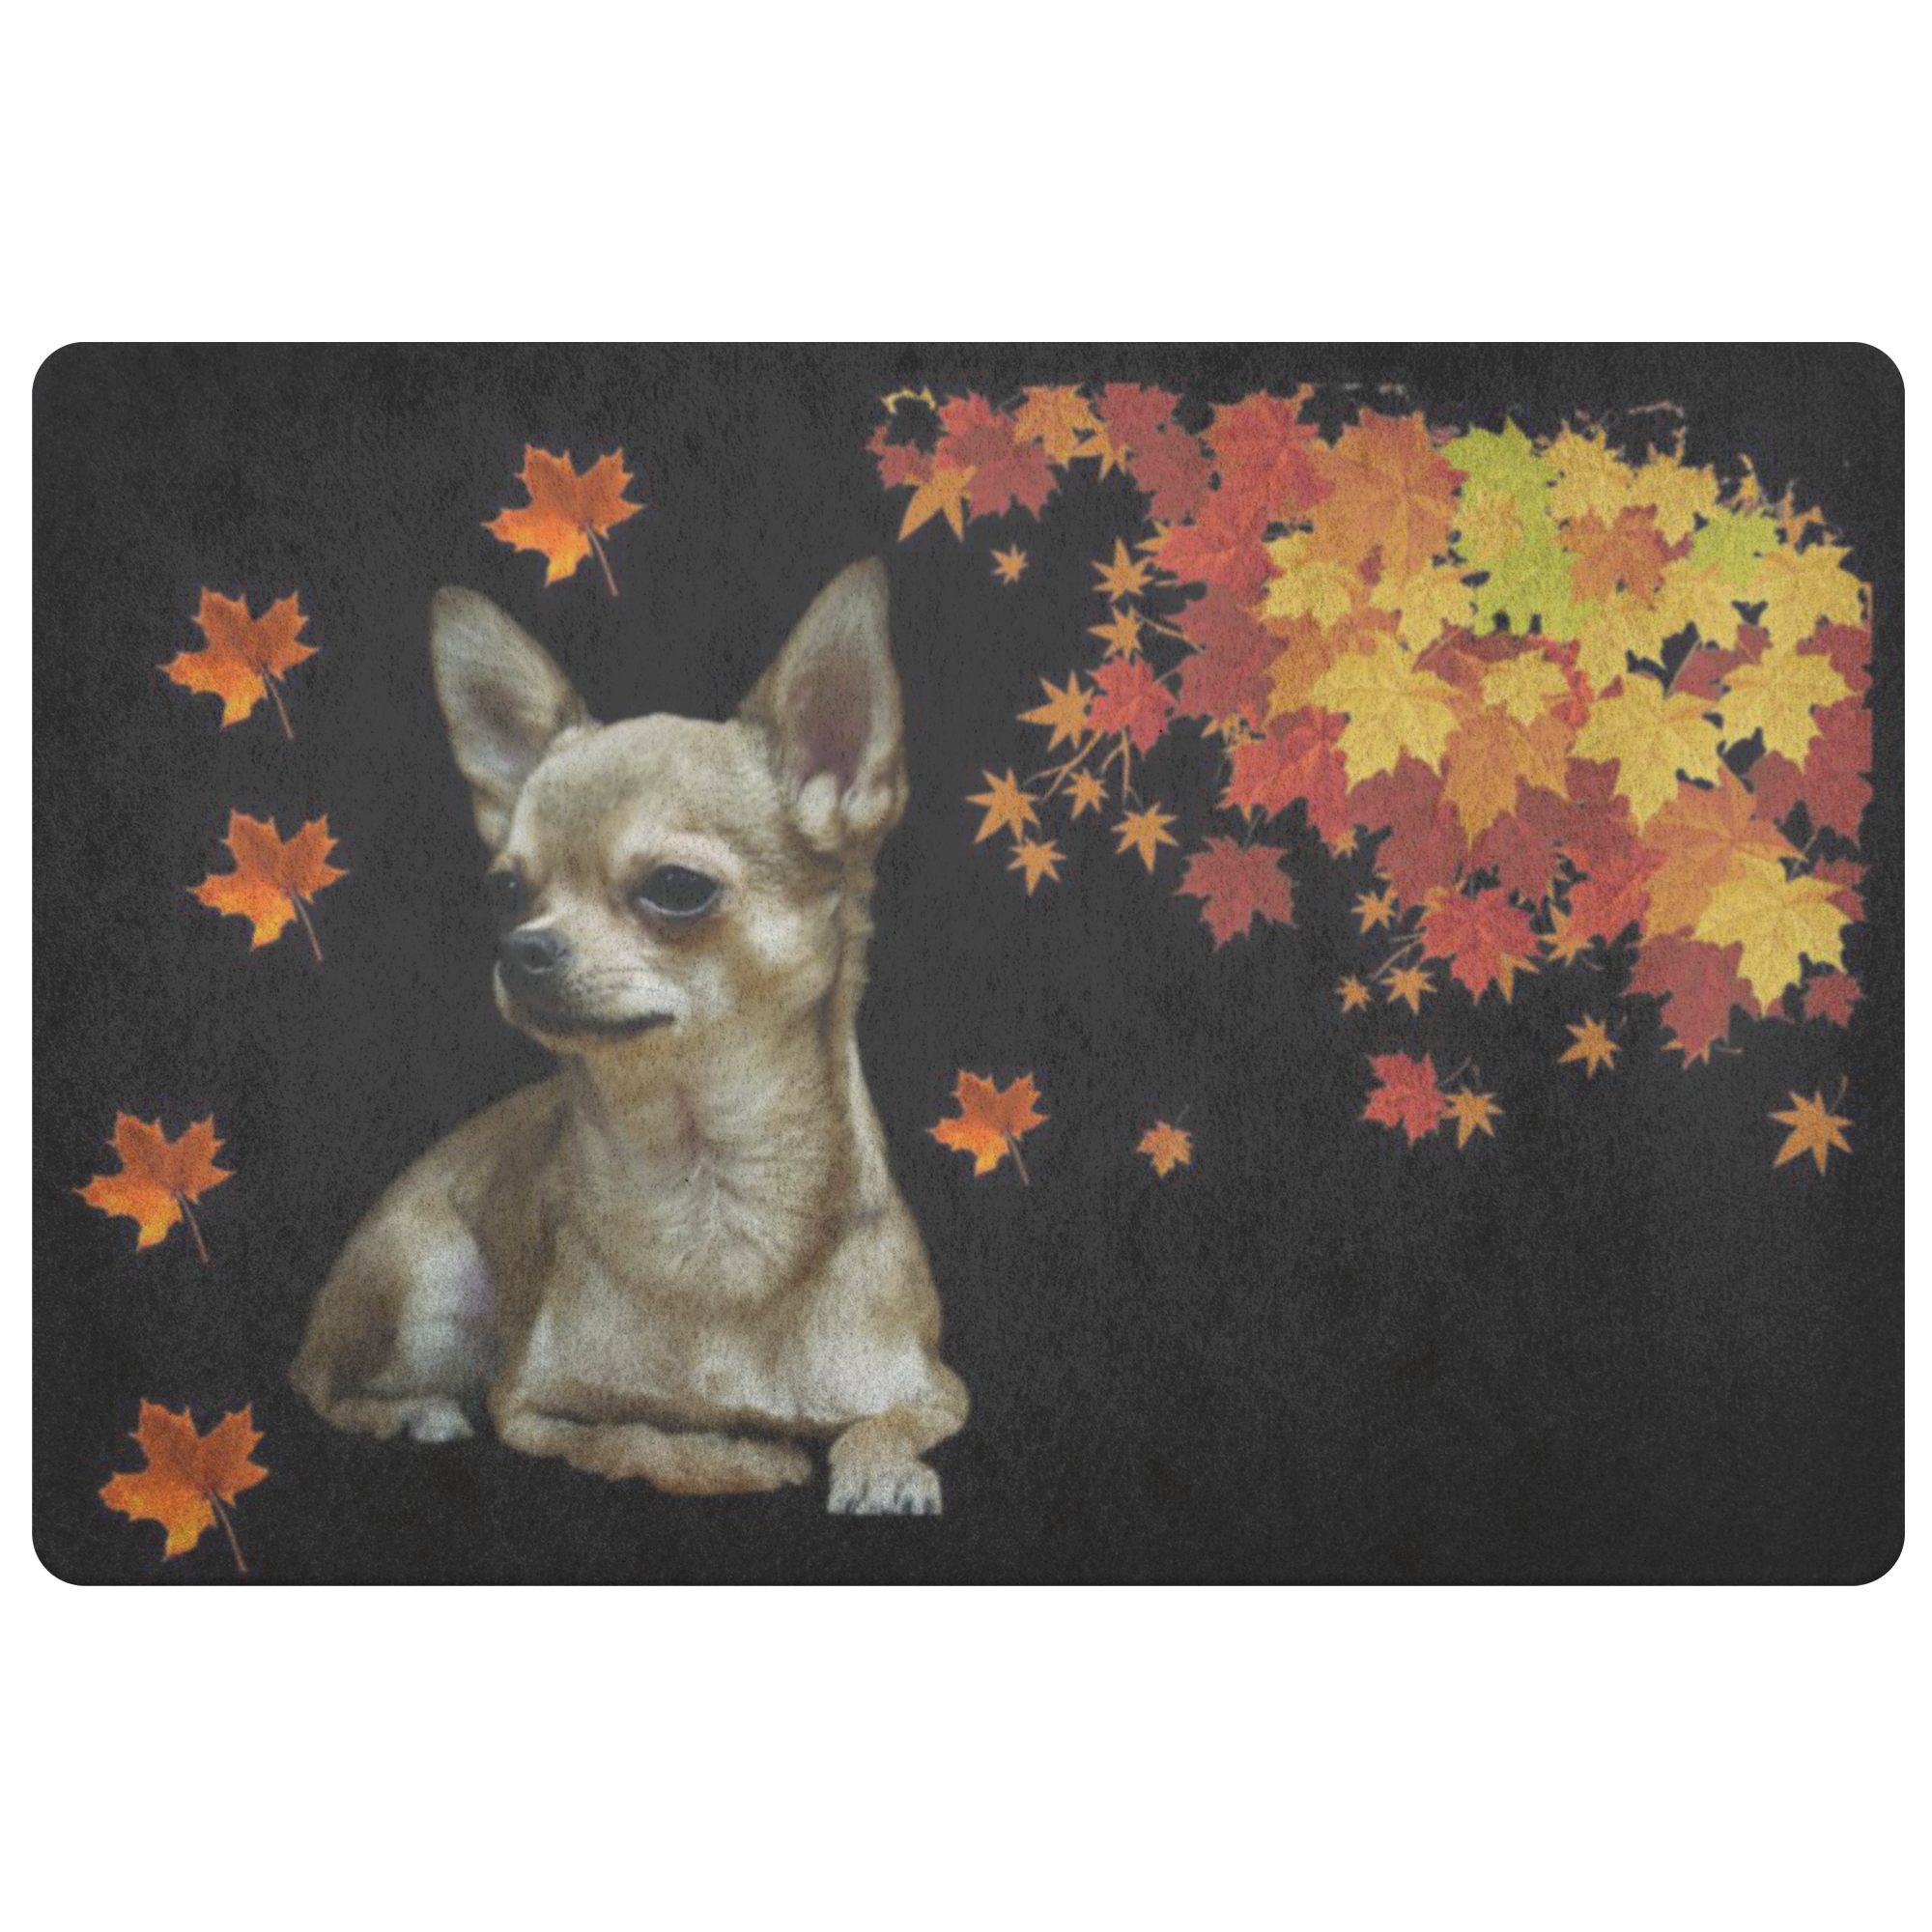 Chihuahua Doormat - Fall